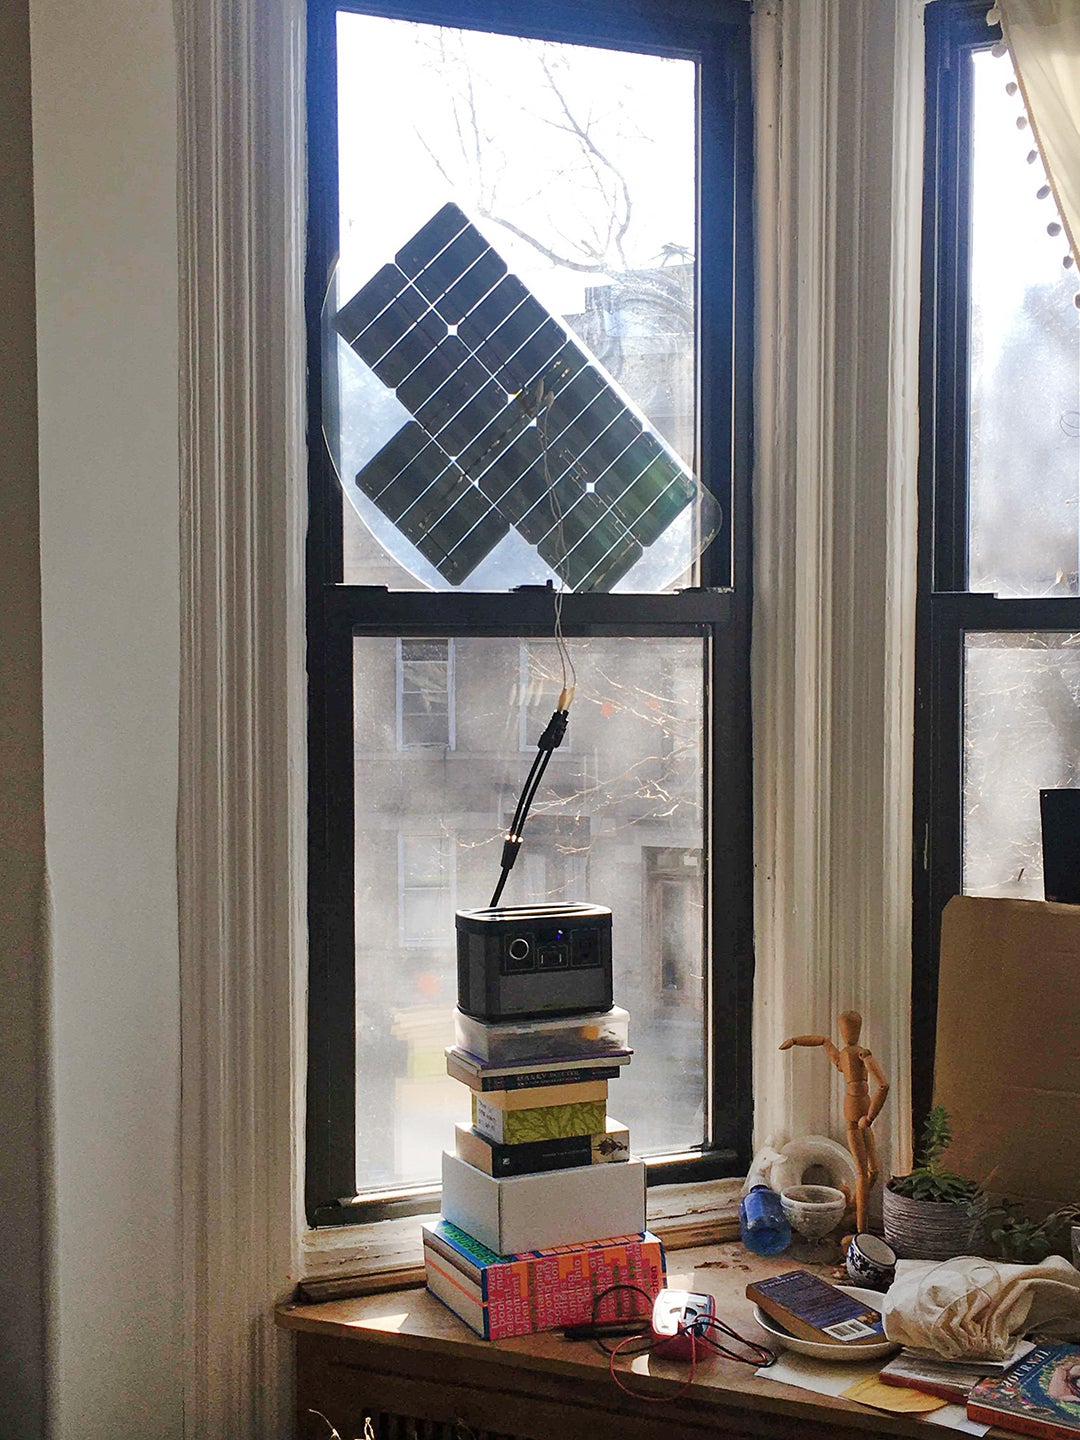 solar panel in window